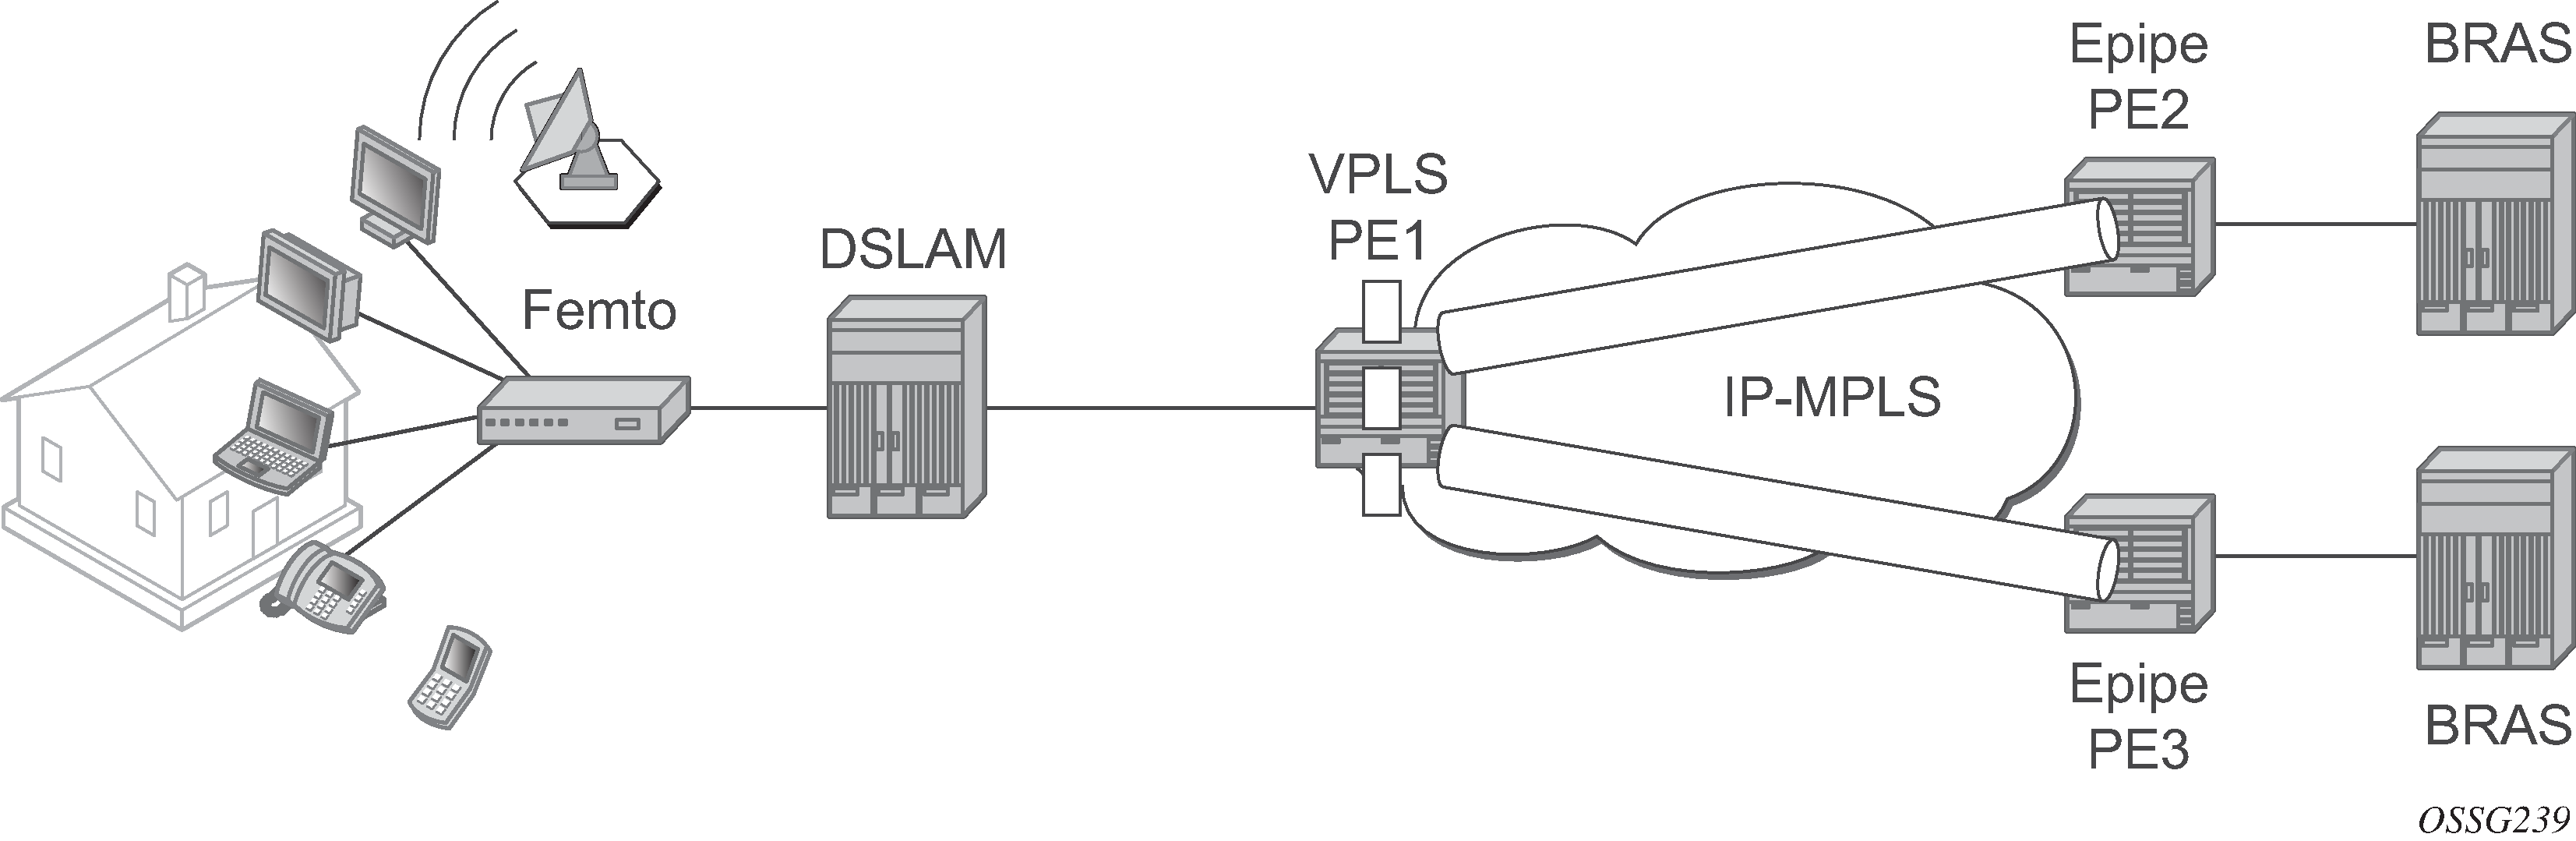 Virtual MAC subnetting for VPLS